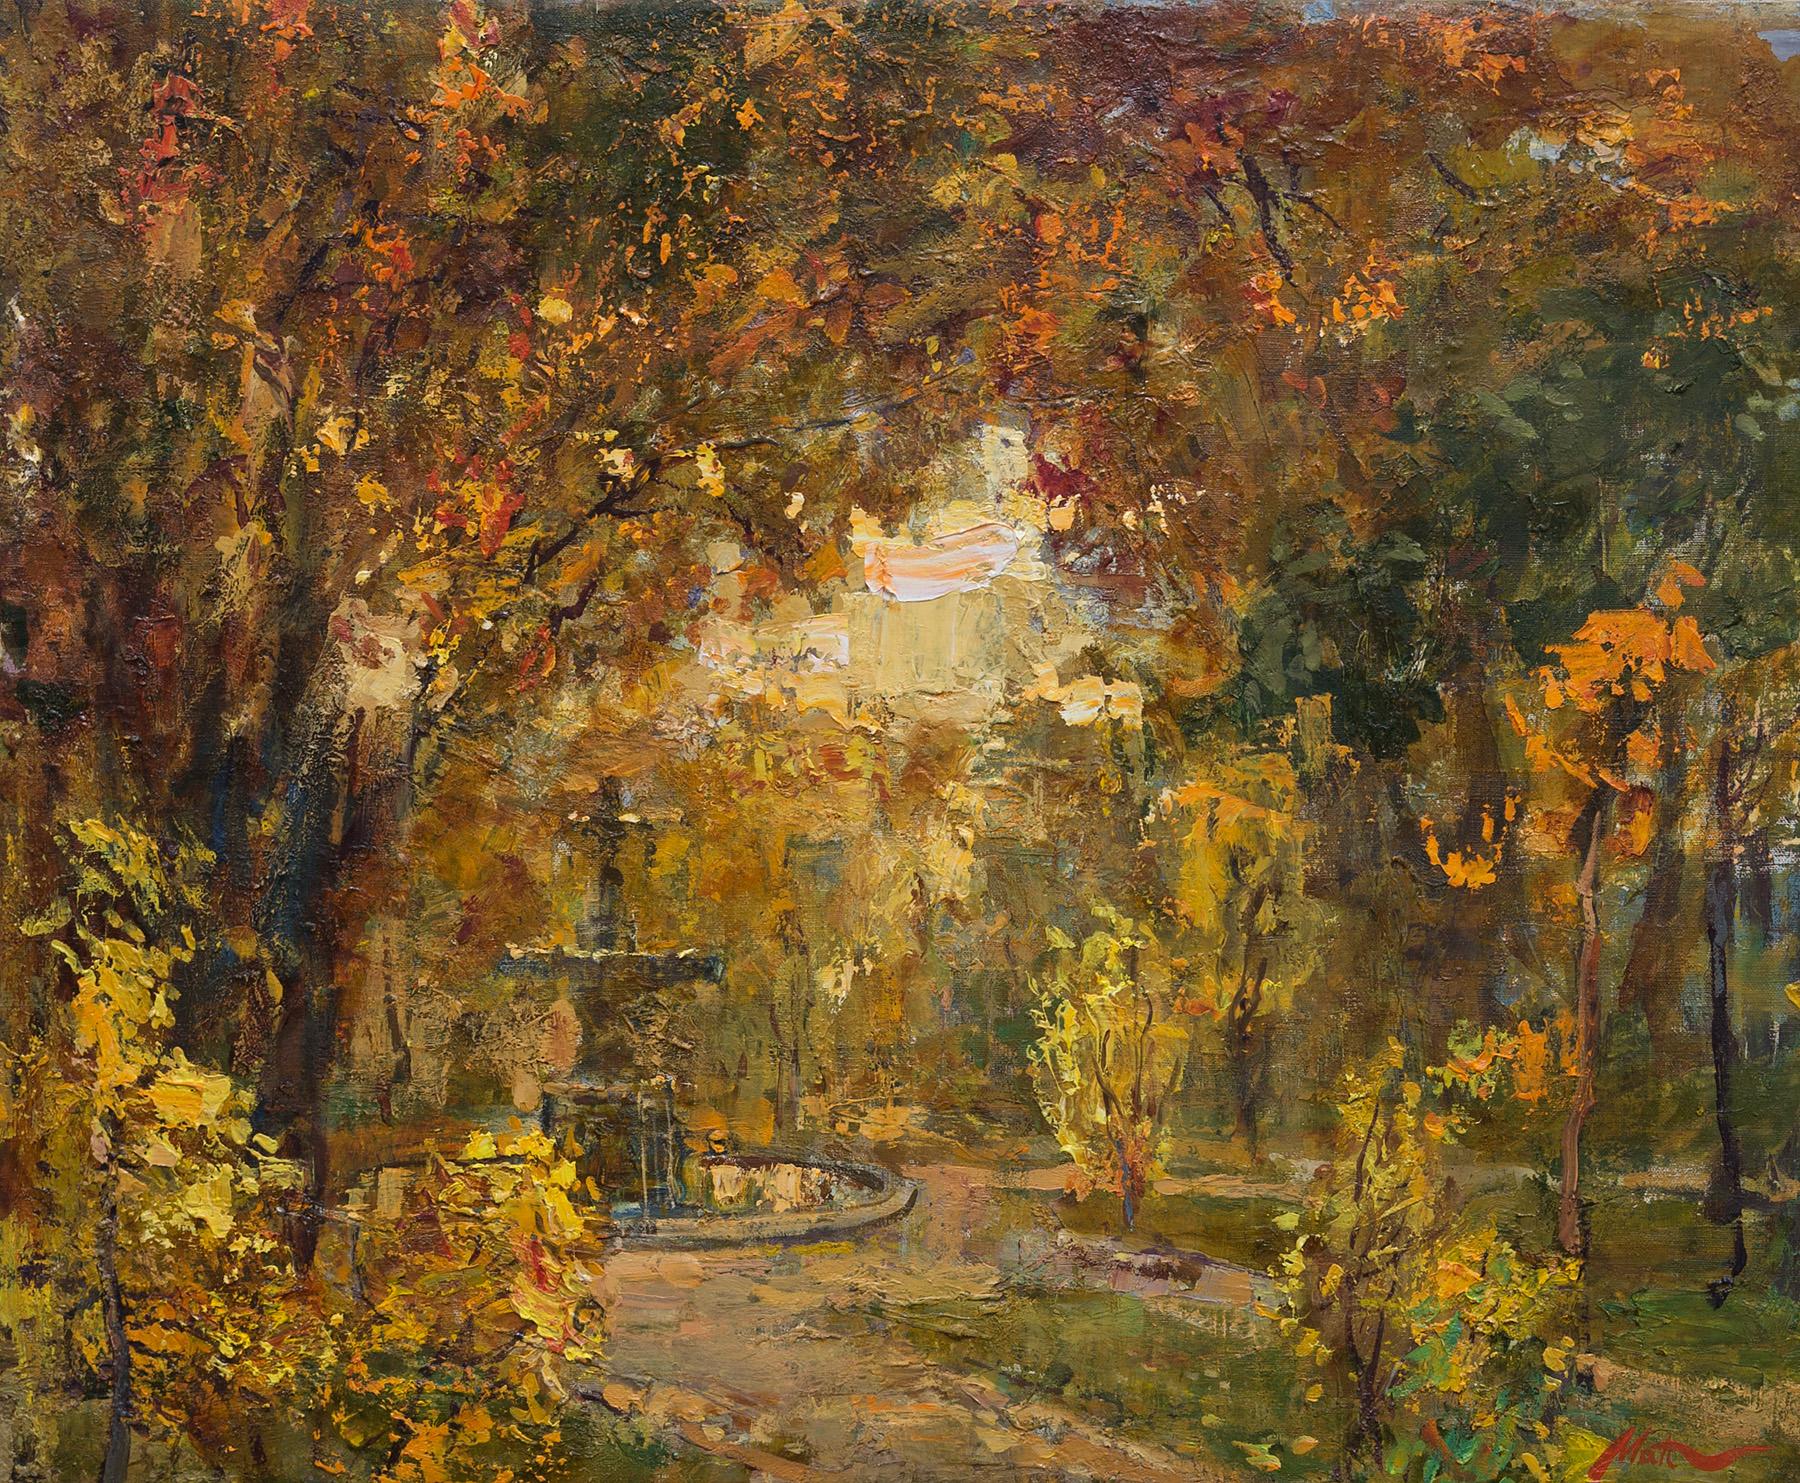 Румянцевский сад. Original modern art painting